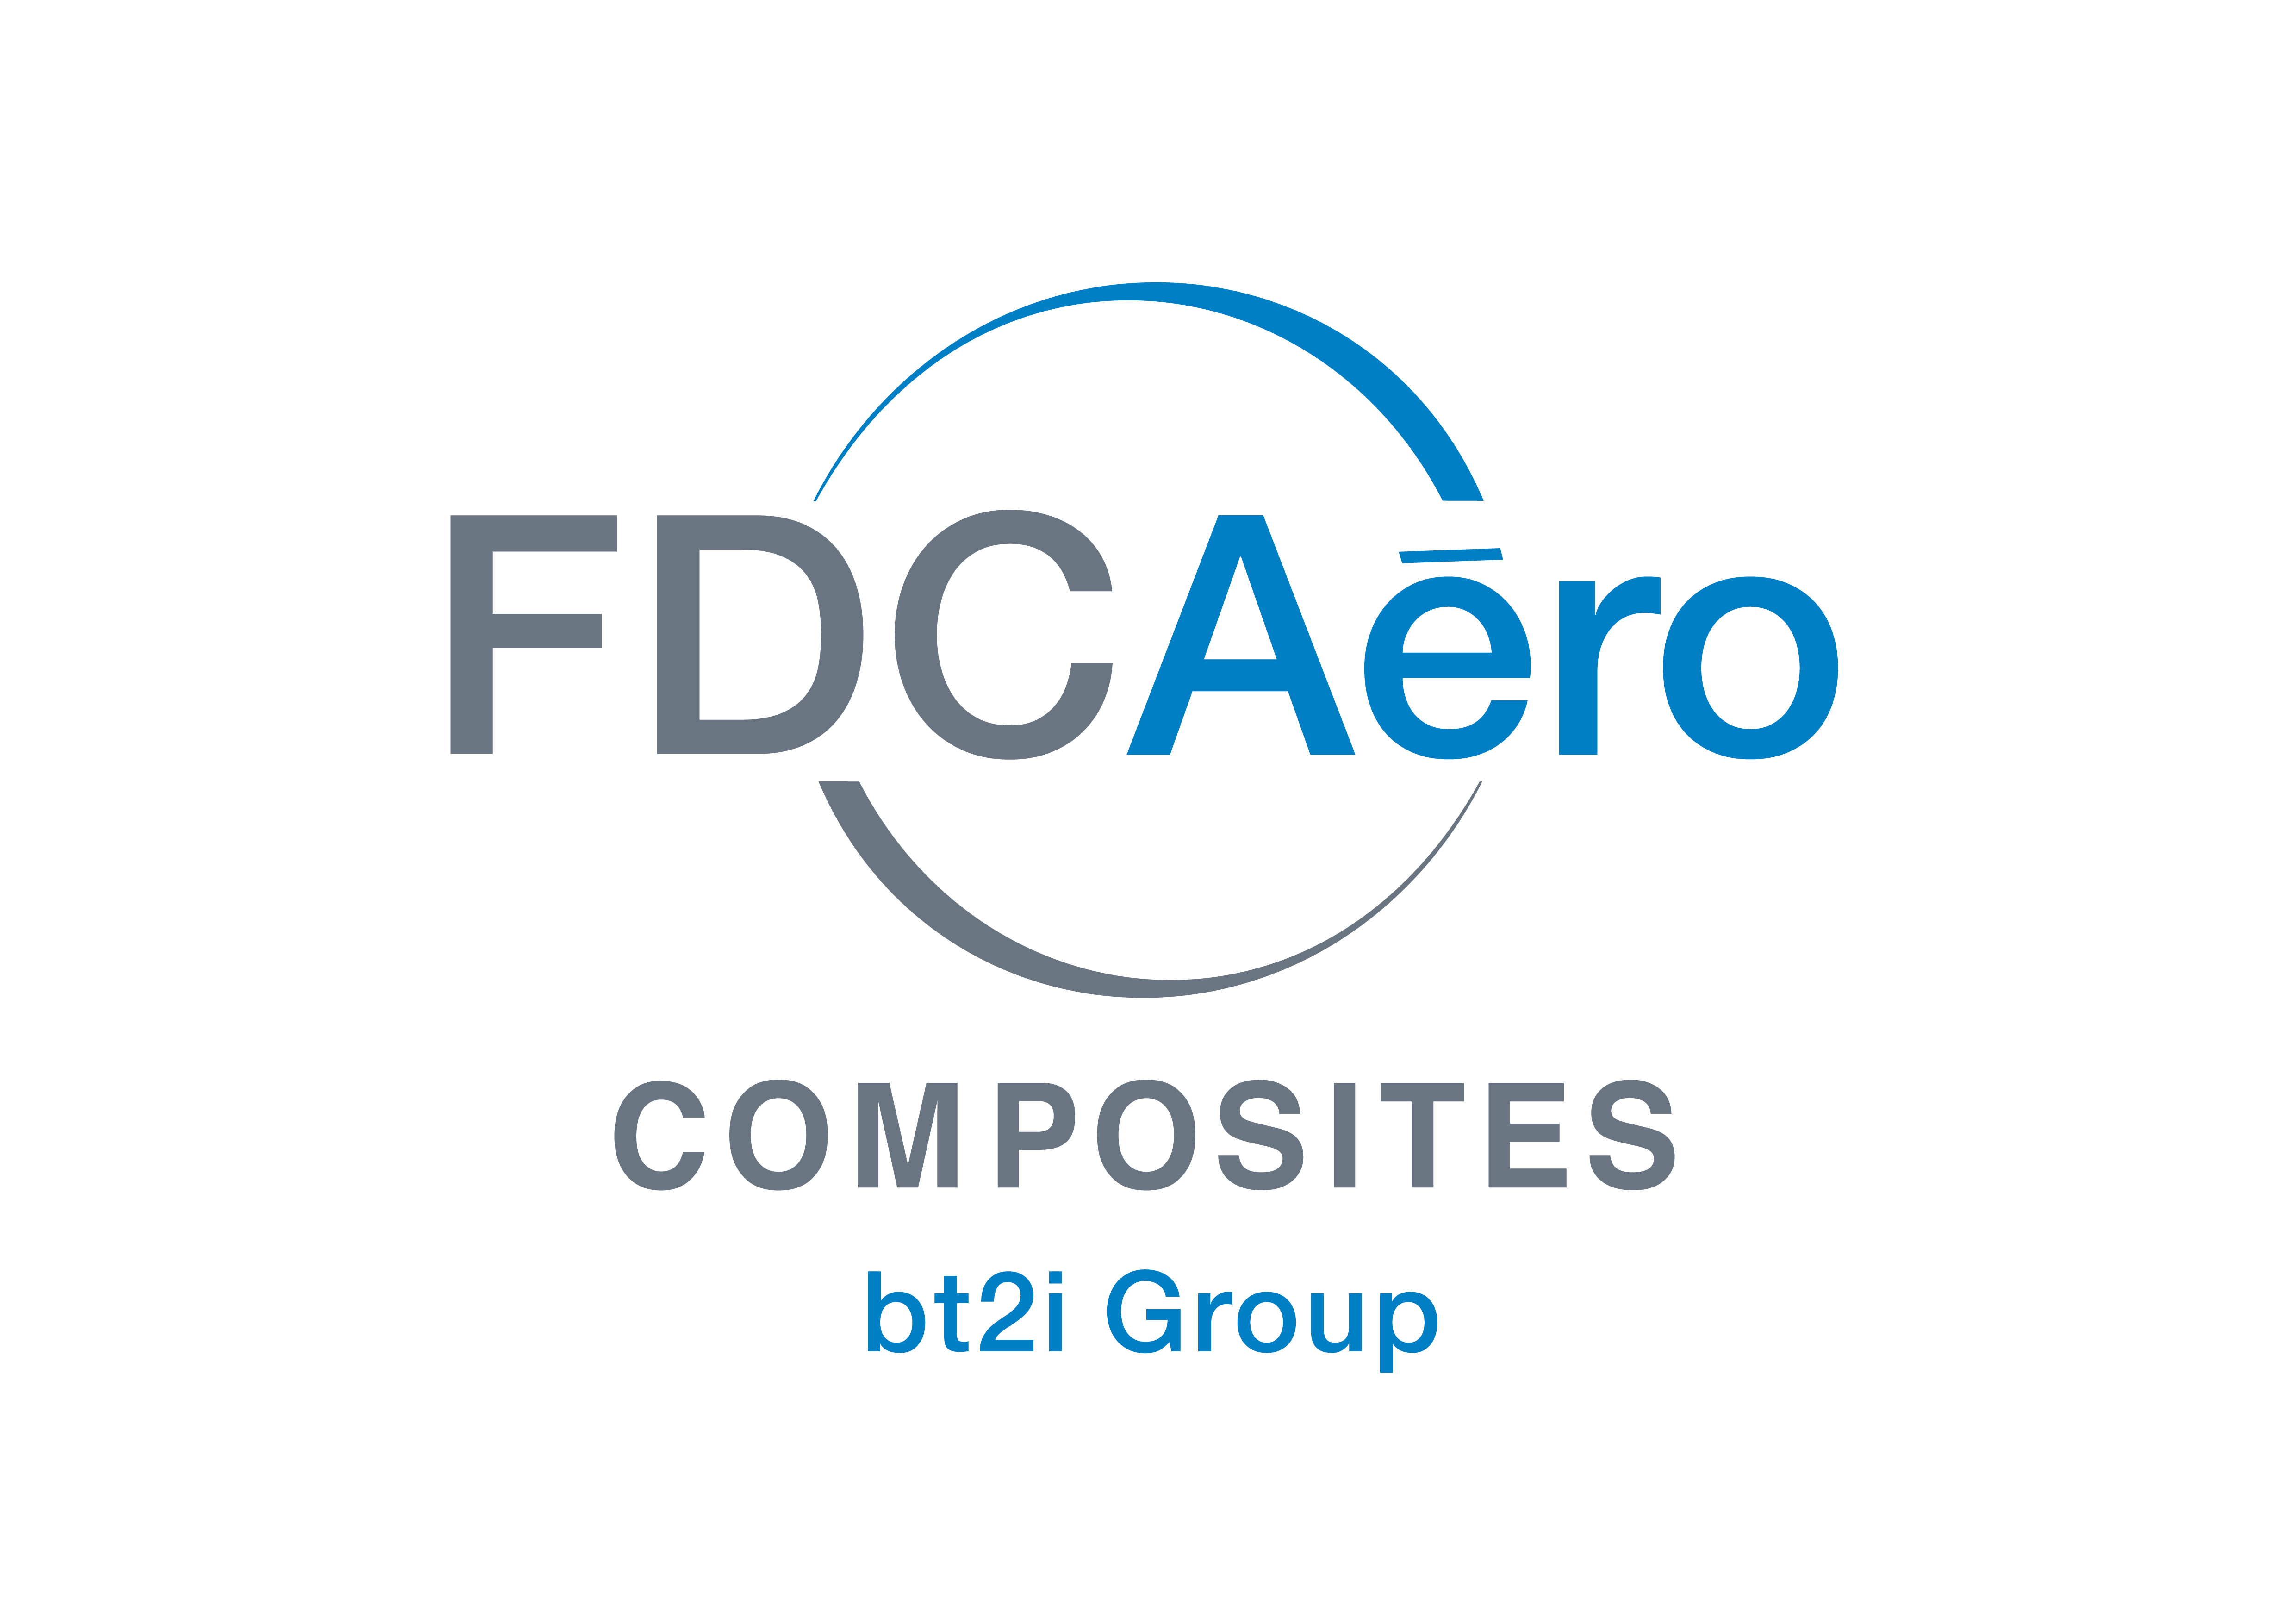 FDC AERO COMPOSITES